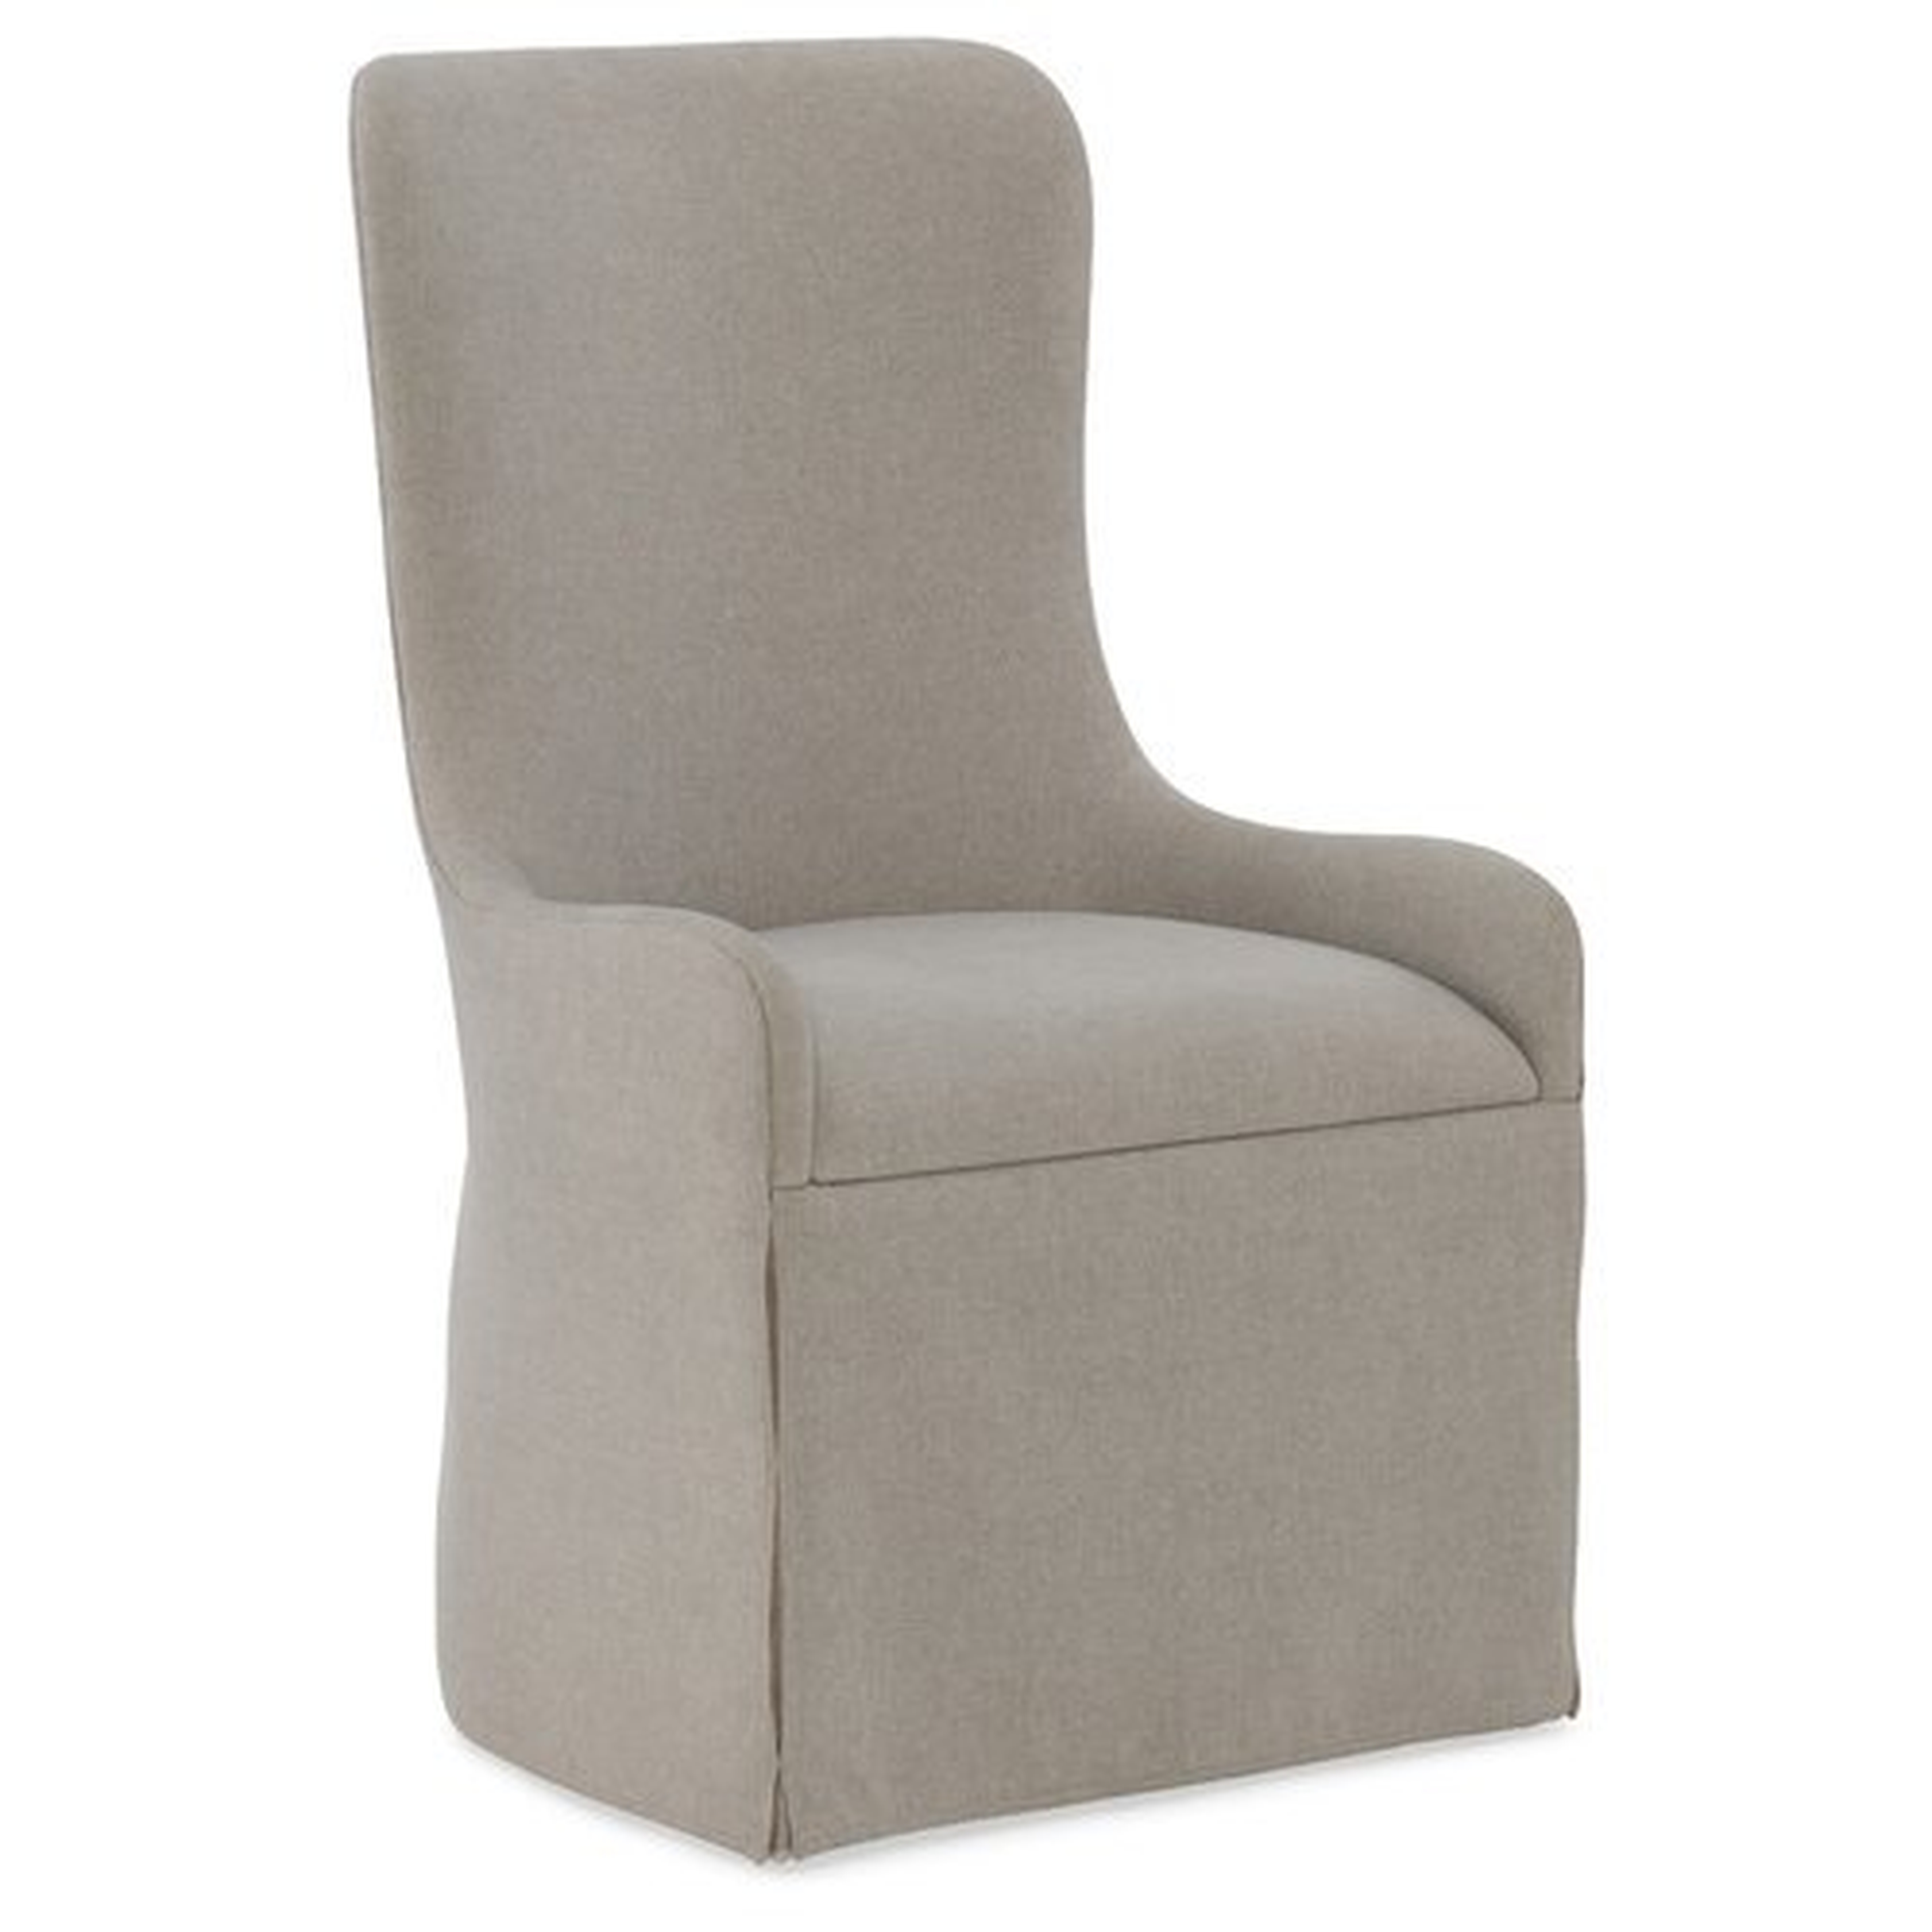 Hooker Furniture Aventura Arm Chair in Cement - Perigold